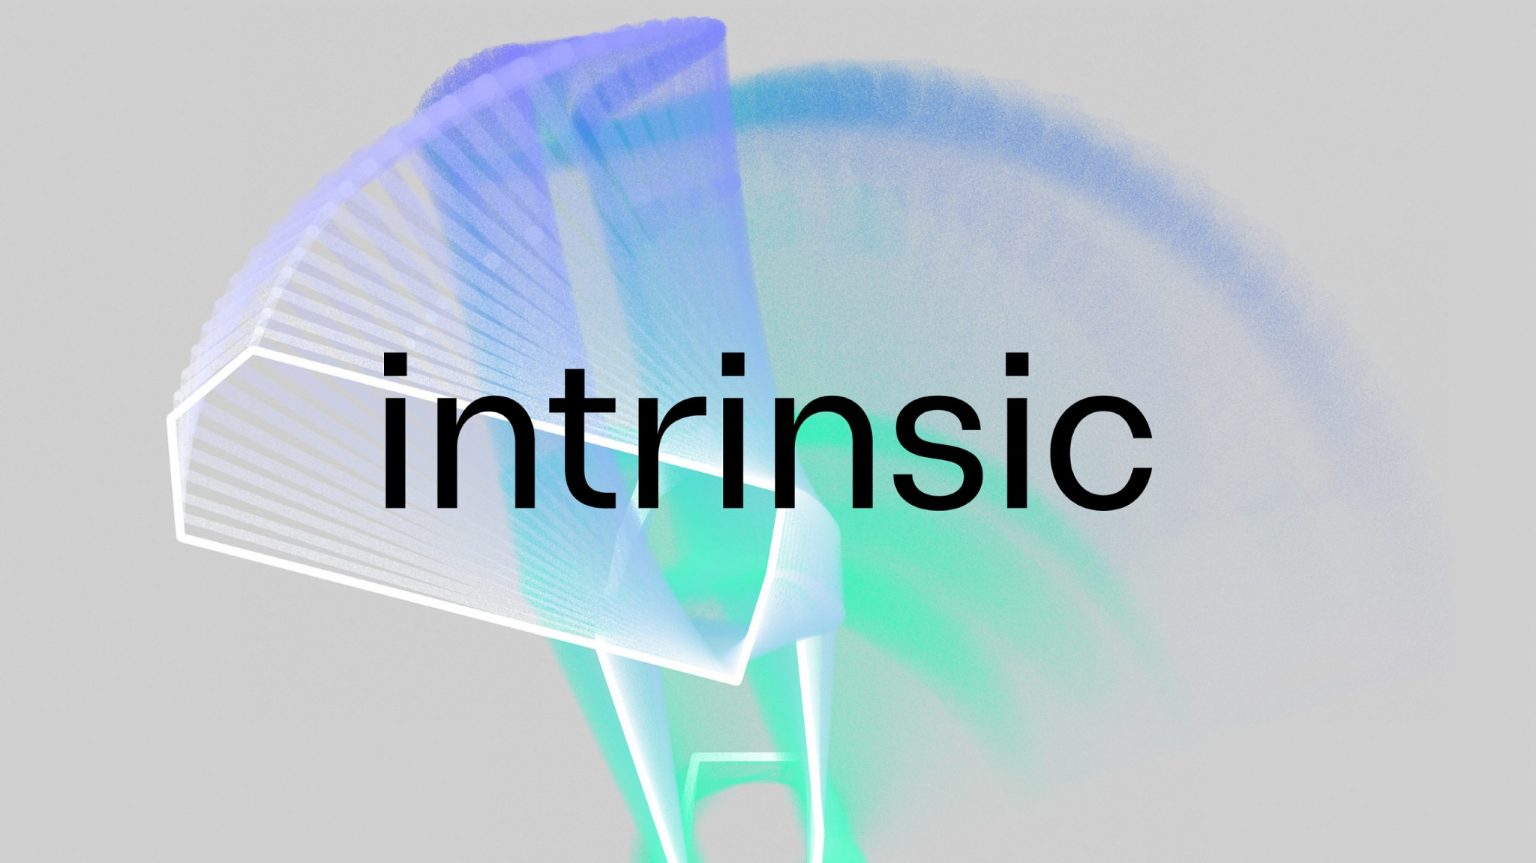 Alphabet to launch a new Robotics Company called Intrinsic| ഇന്ററിൻസിക് എന്ന പേരിൽ ഒരു പുതിയ റോബോട്ടിക് കമ്പനി ആൽഫബെറ്റ് ആരംഭിക്കും_40.1